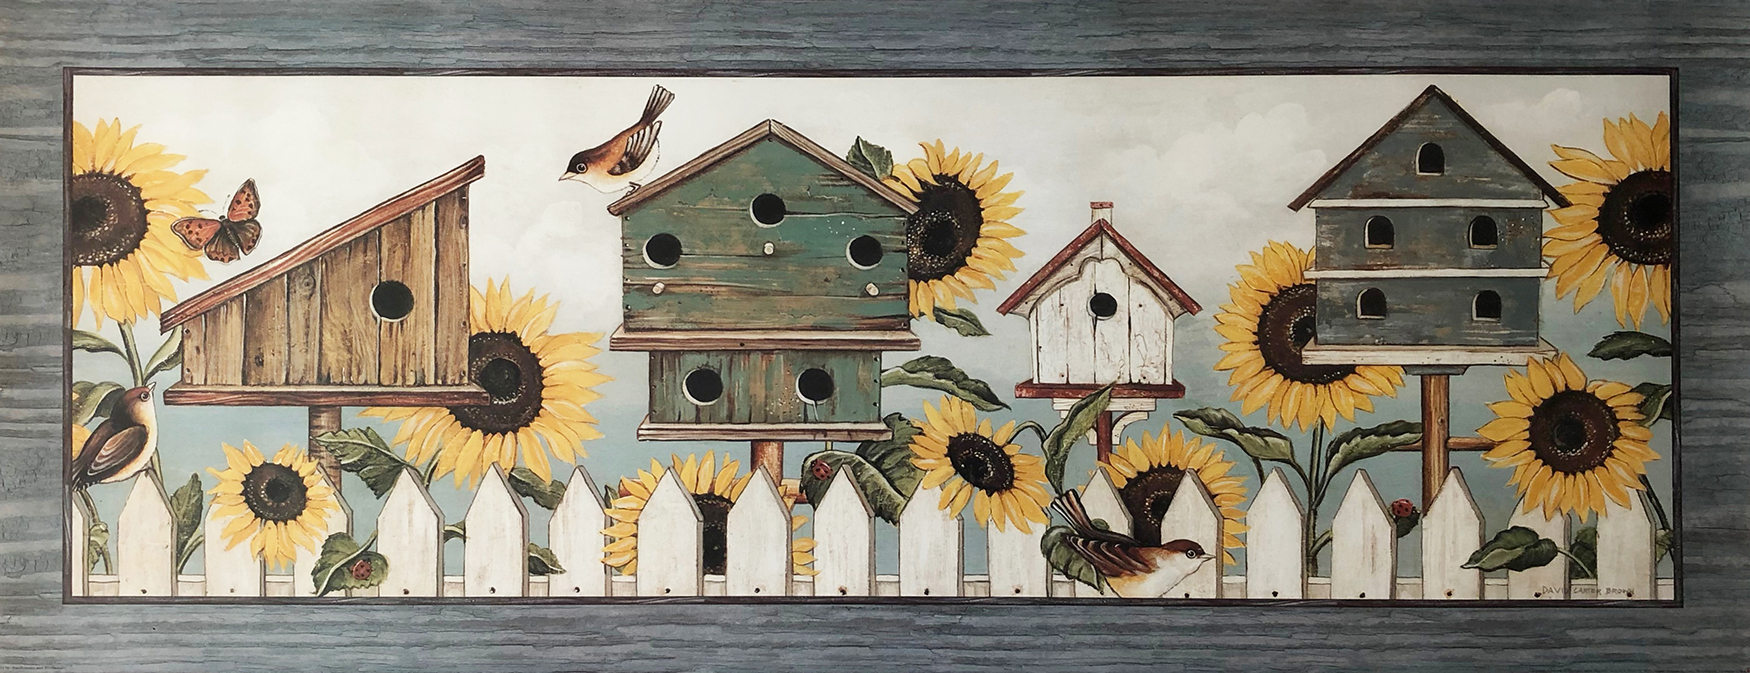 Sunflowers and Birdhouses